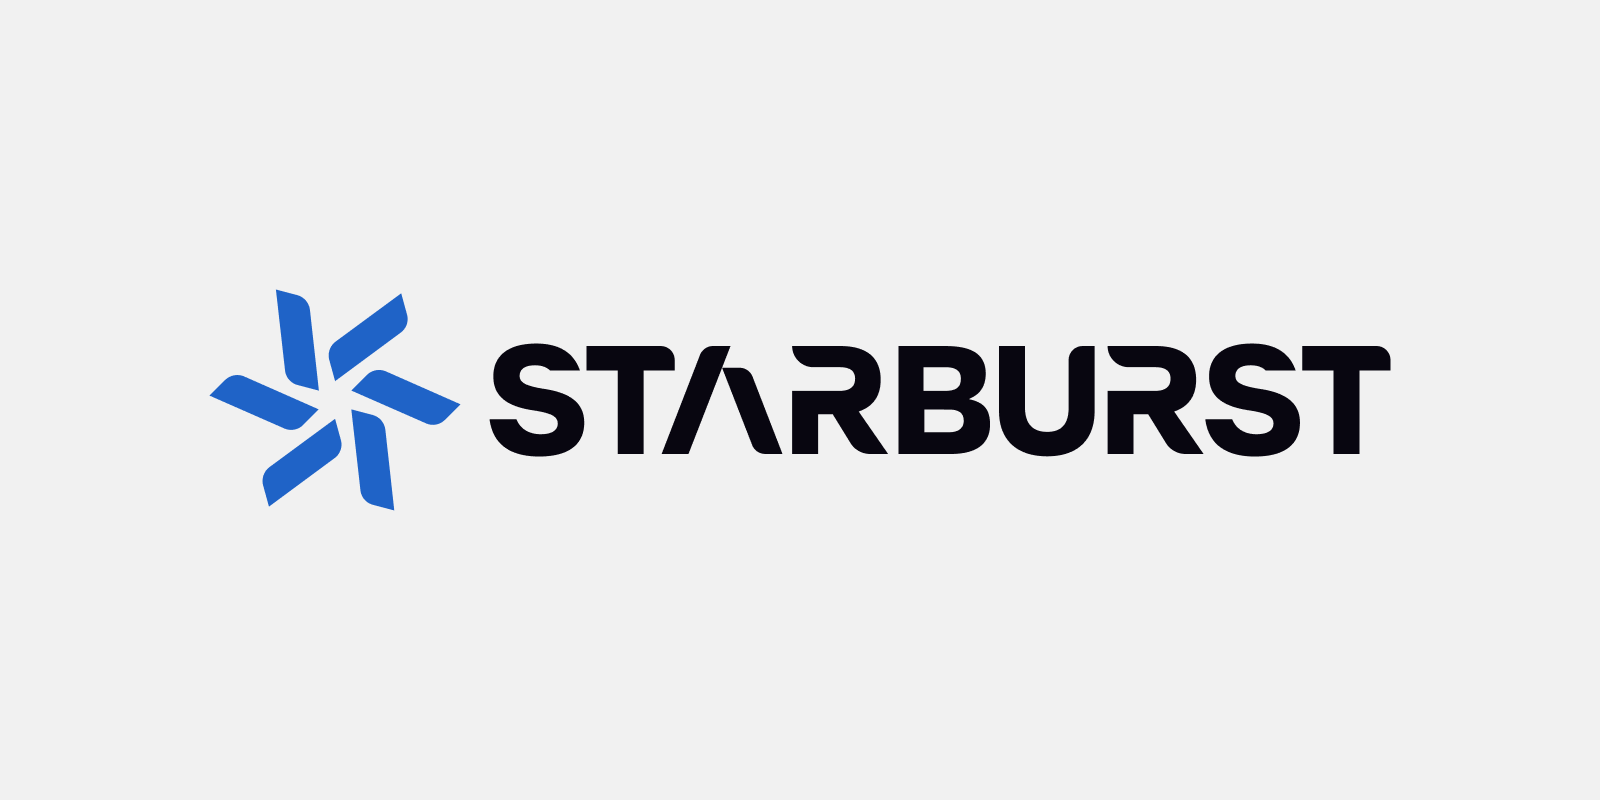 Starburst accelerator logo